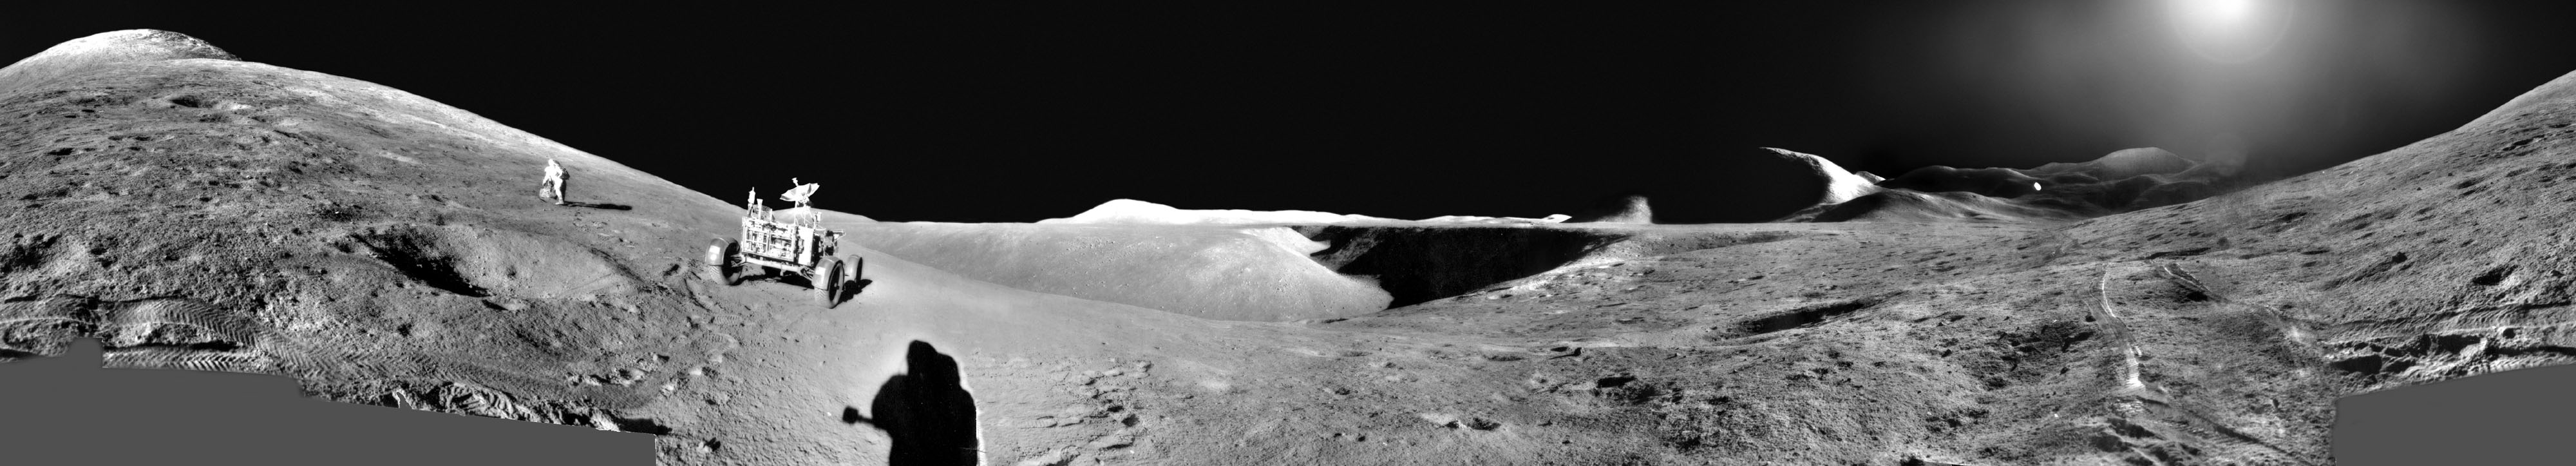 Panorama s korablya Apollon-15